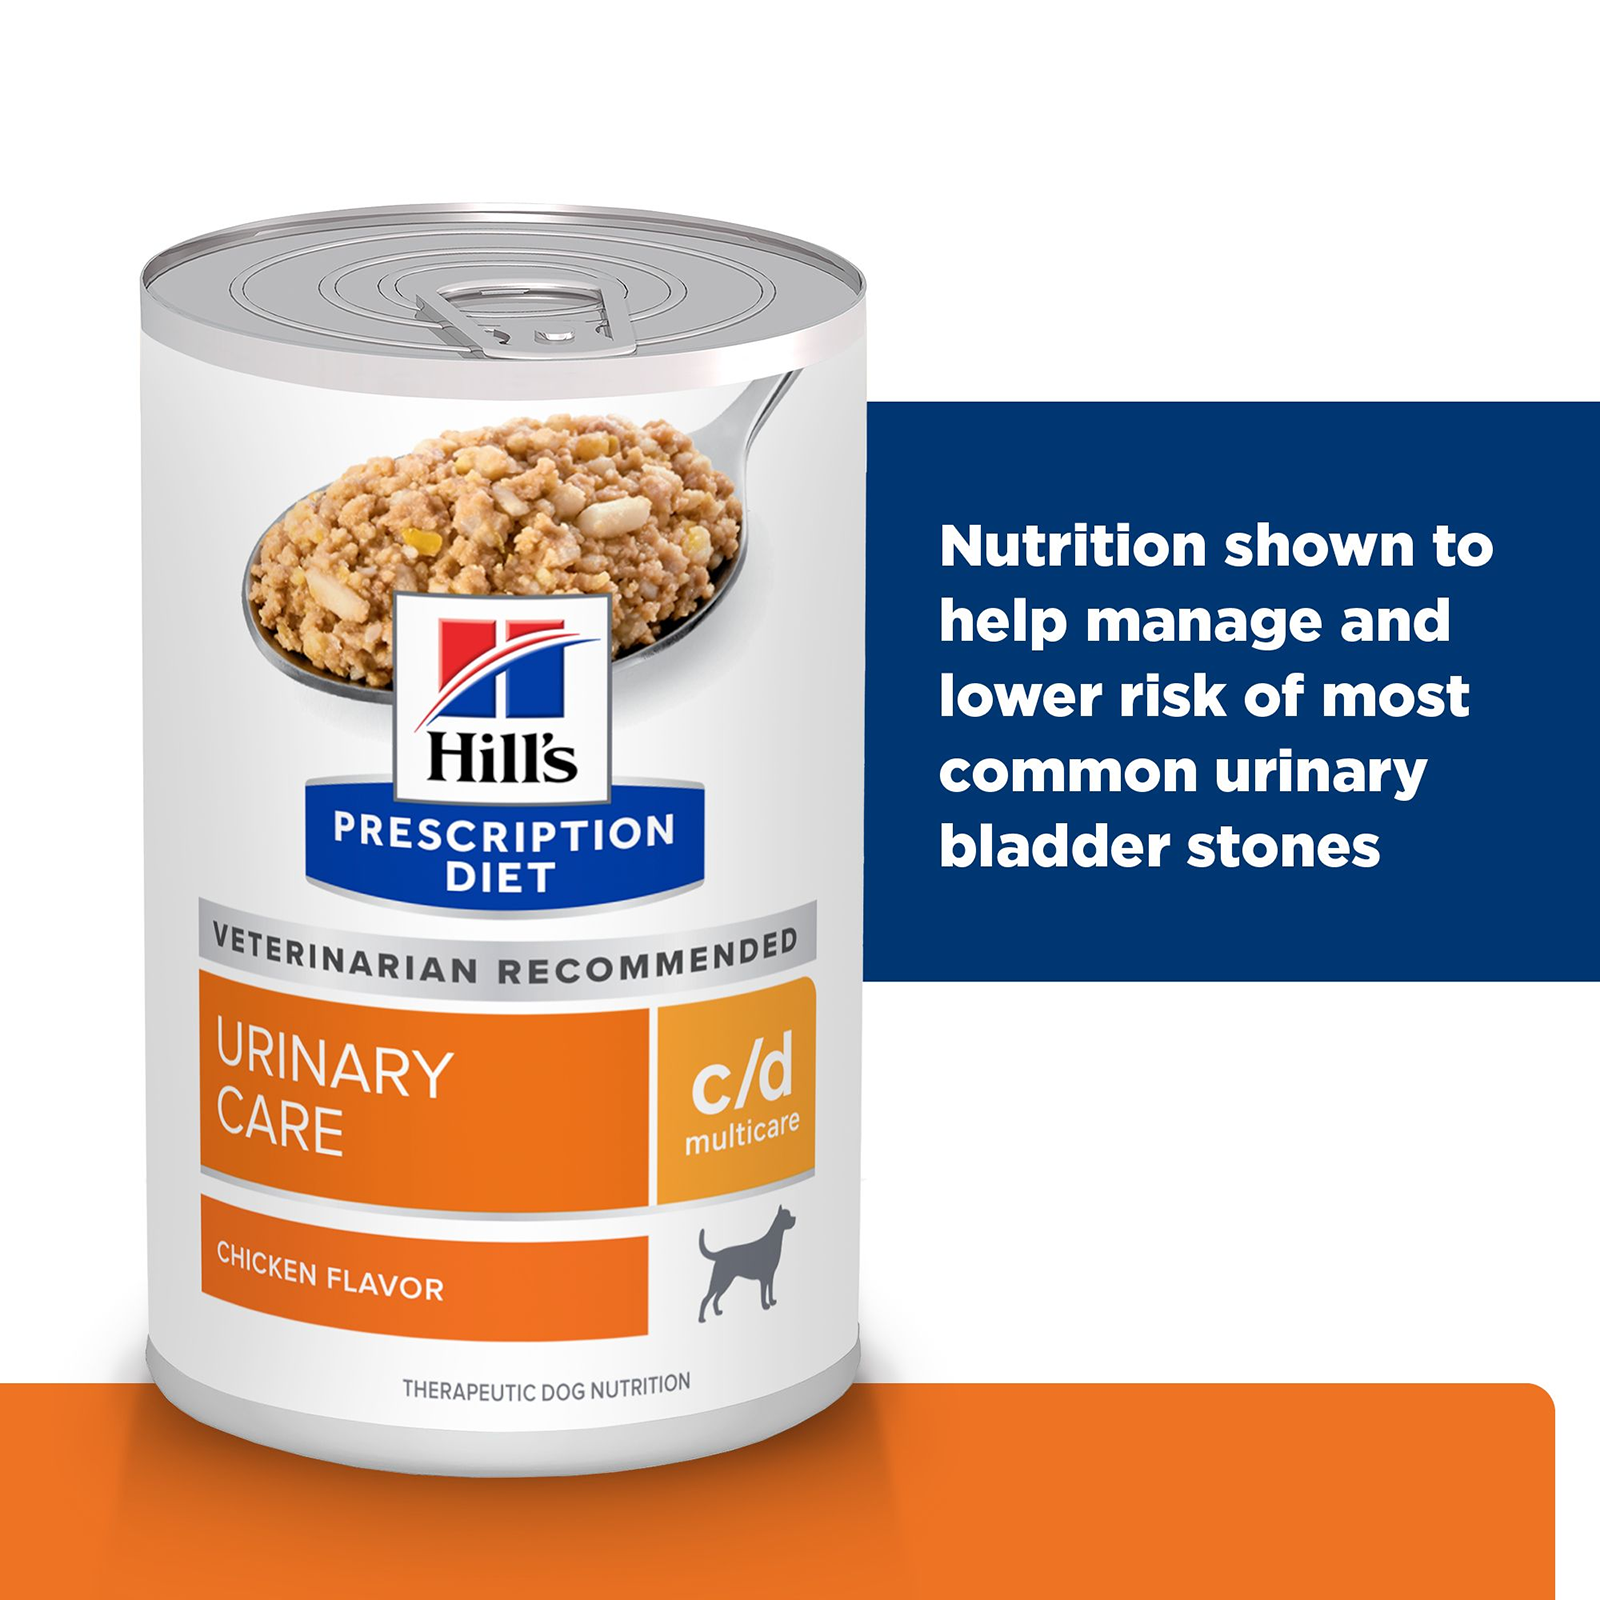 Hill's Prescription Diet Dog Food Can c/d Multicare Urinary Care